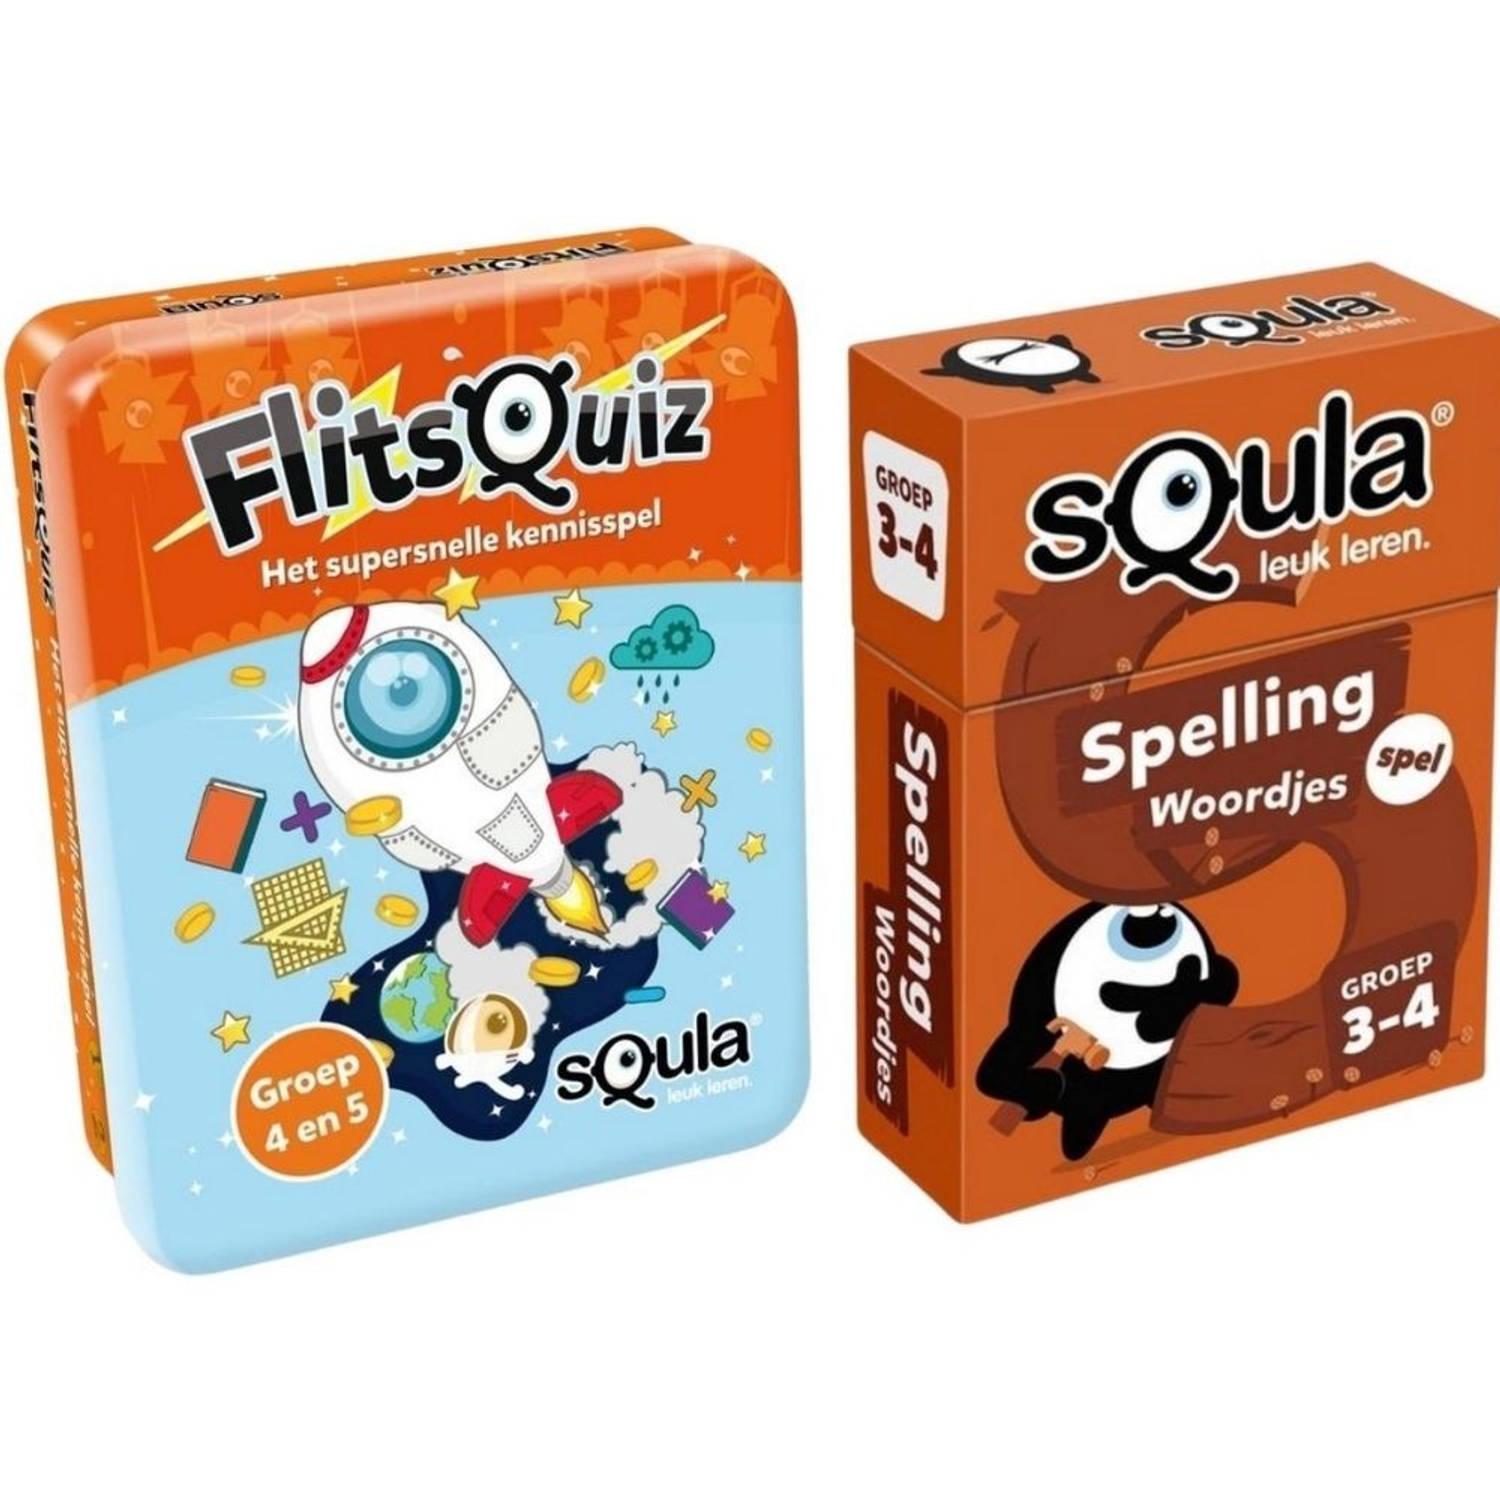 Spellenbundel - Squla - 2 stuks - Flitsquiz Groep 4 5 - Spelling (Groep 3&4)